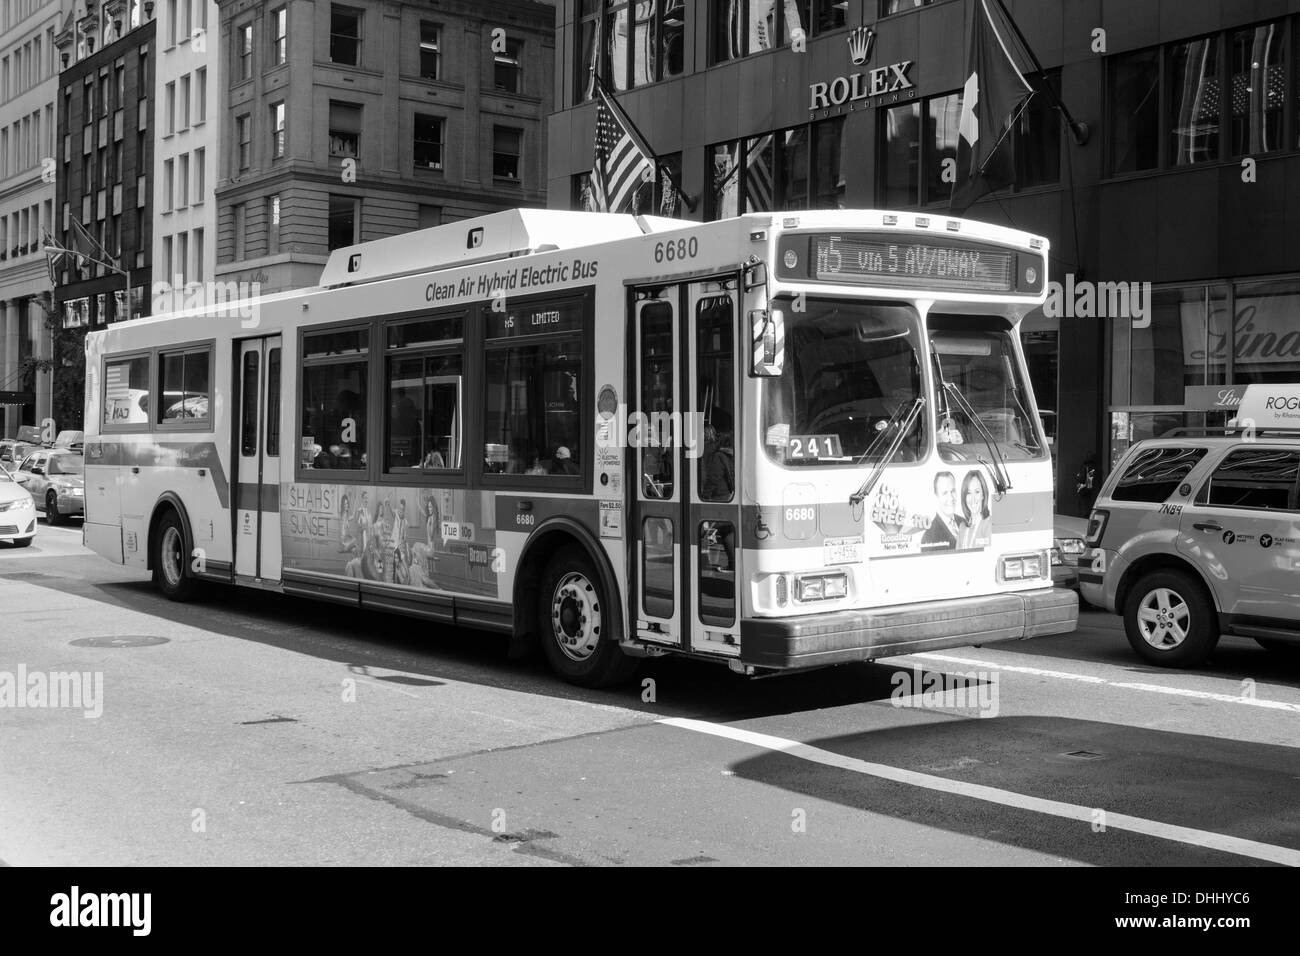 Aria pulita ibrido Bus elettrico, Manhattan, New York City, Stati Uniti d'America. Foto Stock